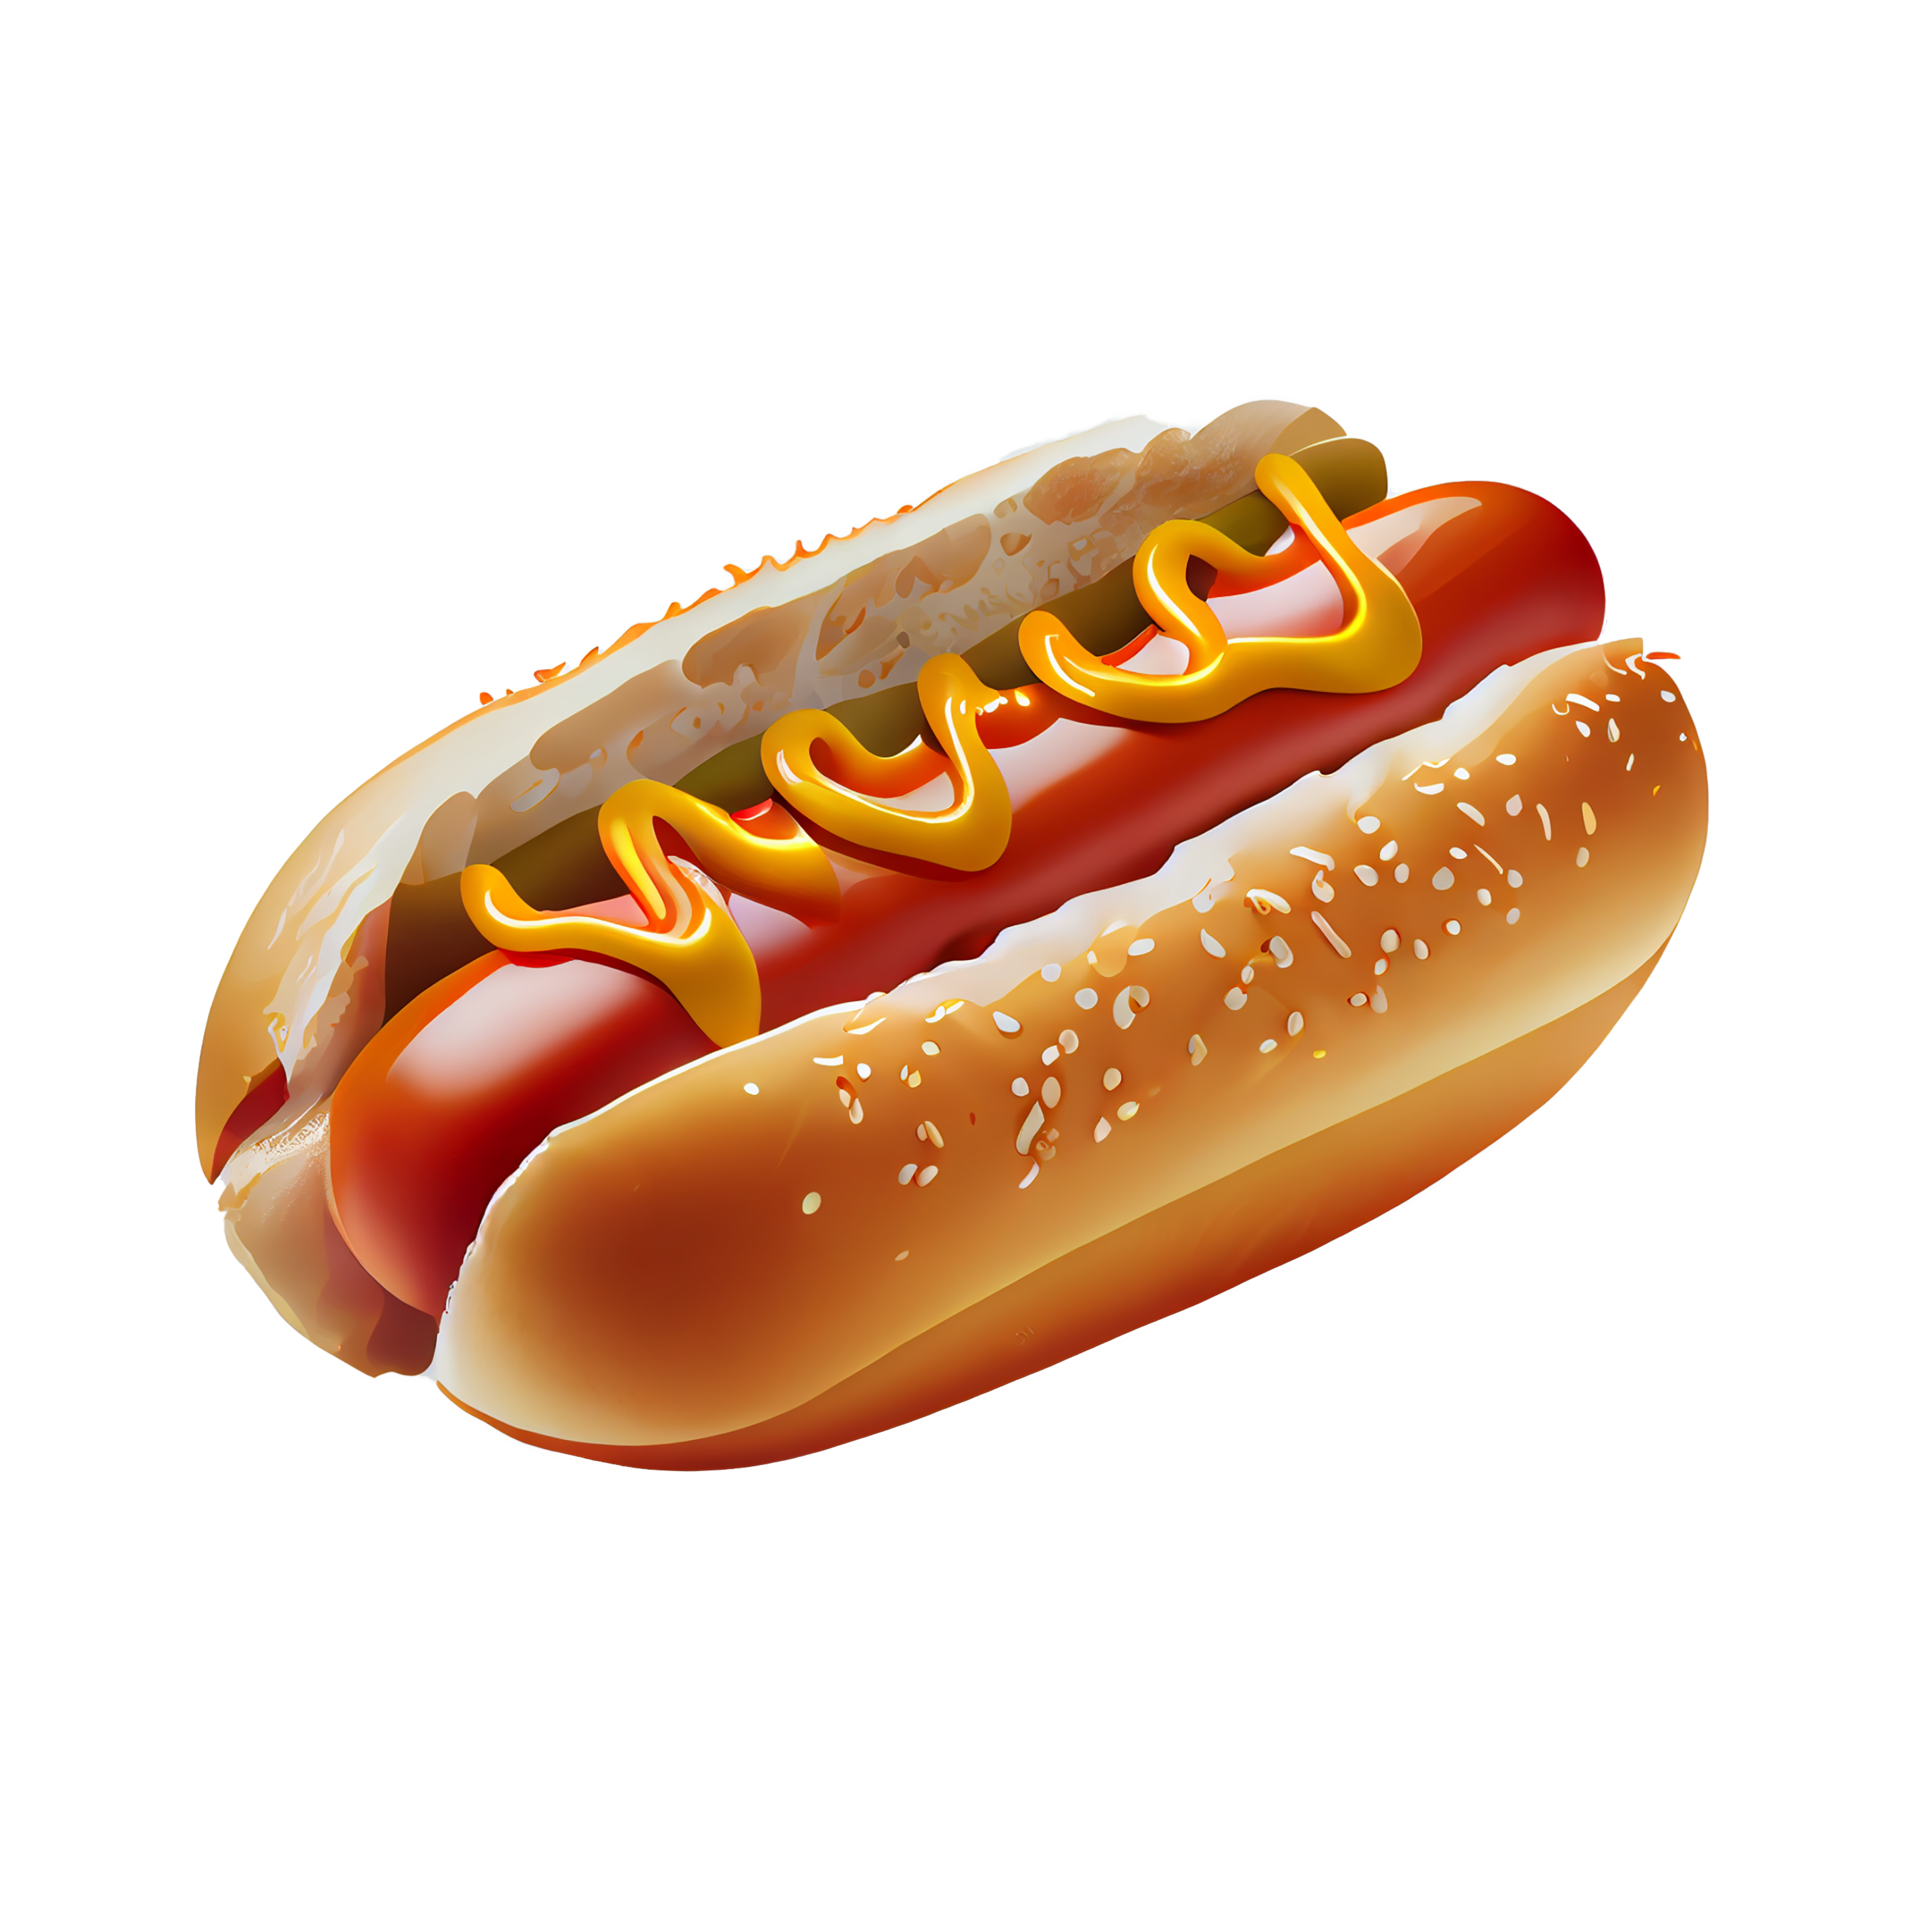 Hotdog PNG Image File